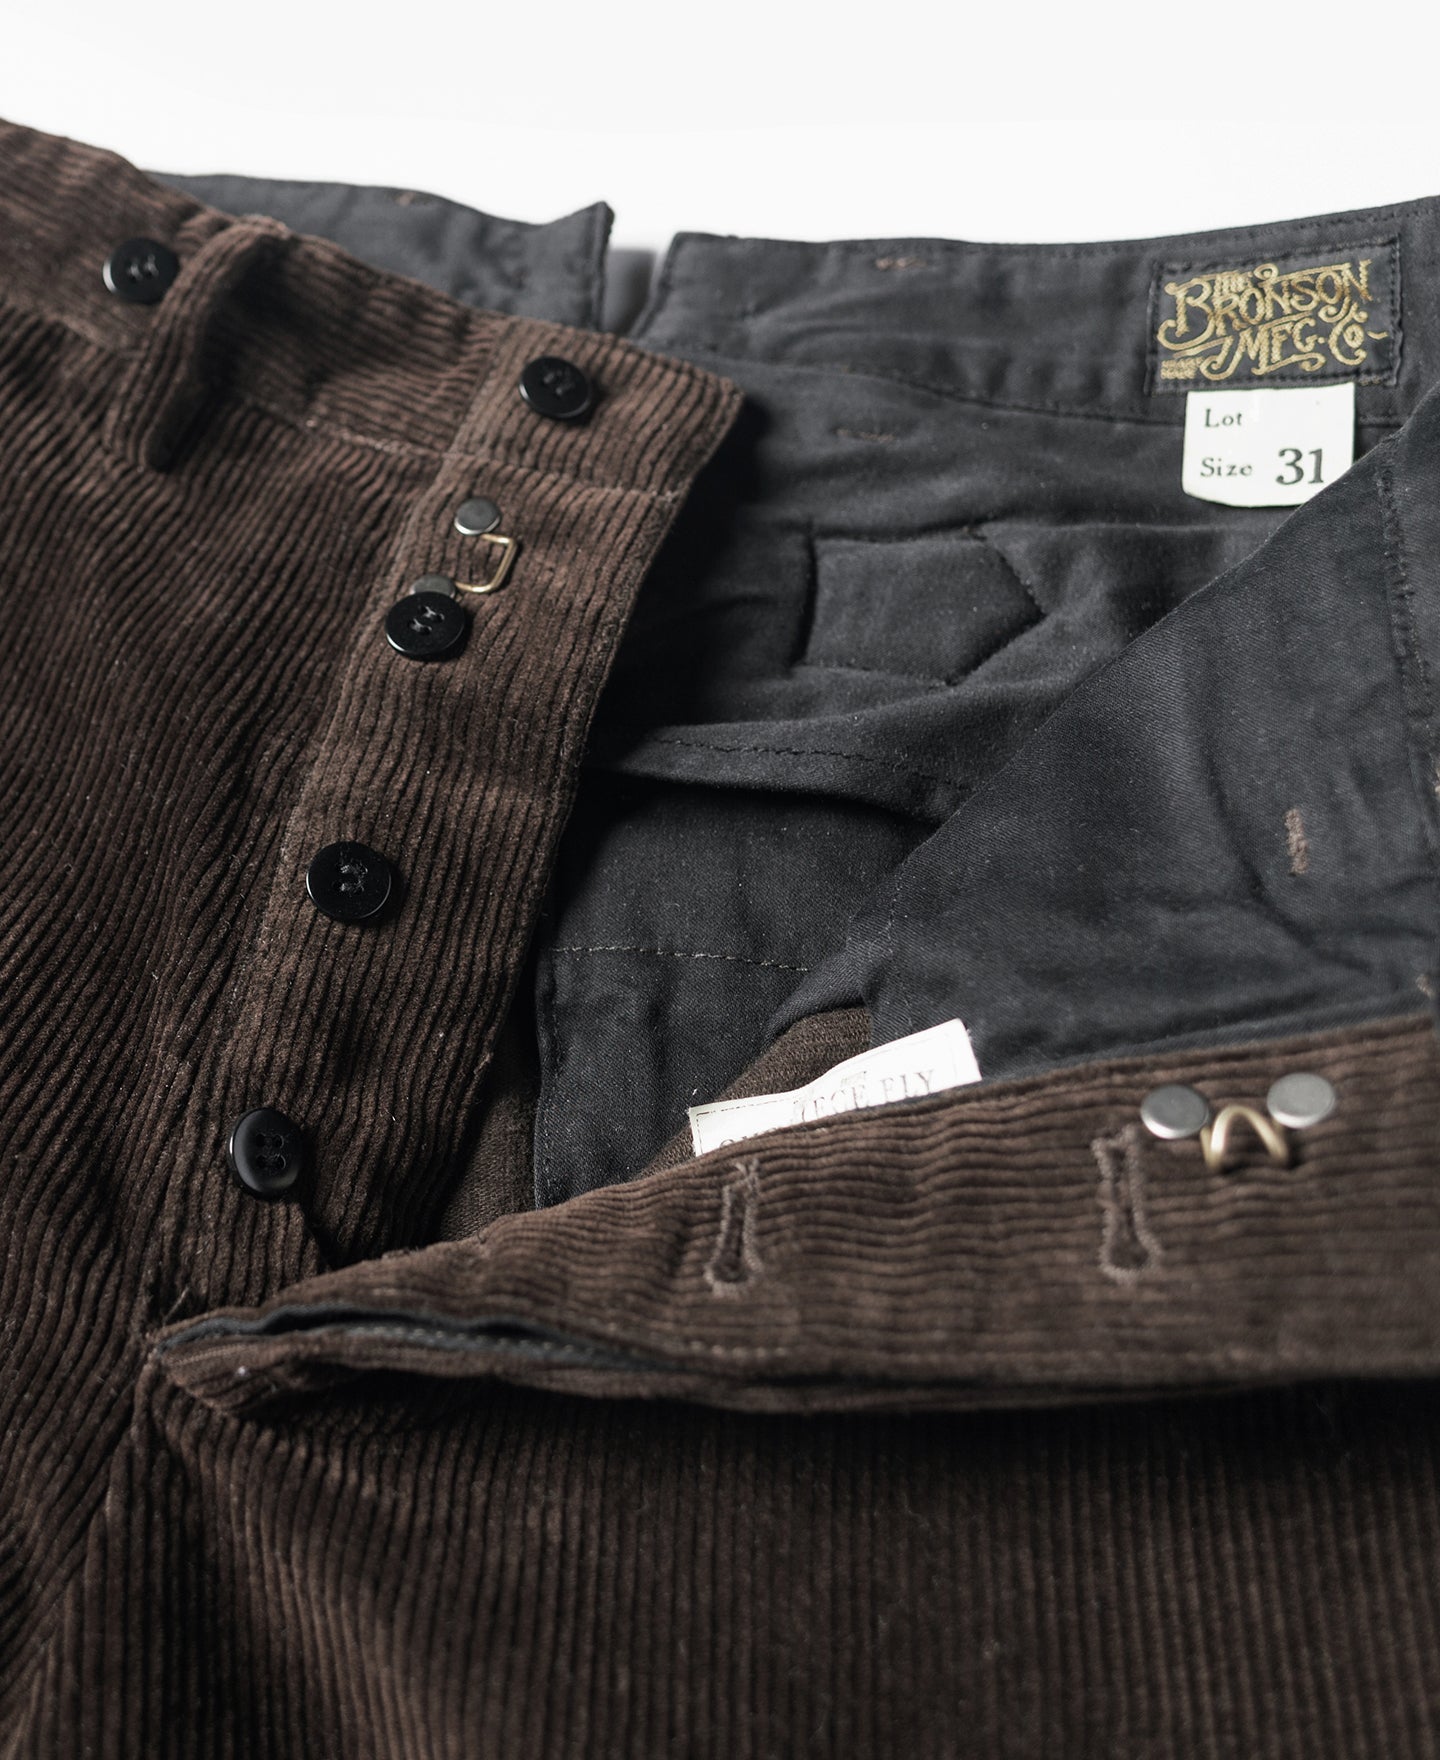 1920s French vintage corduroy work pants